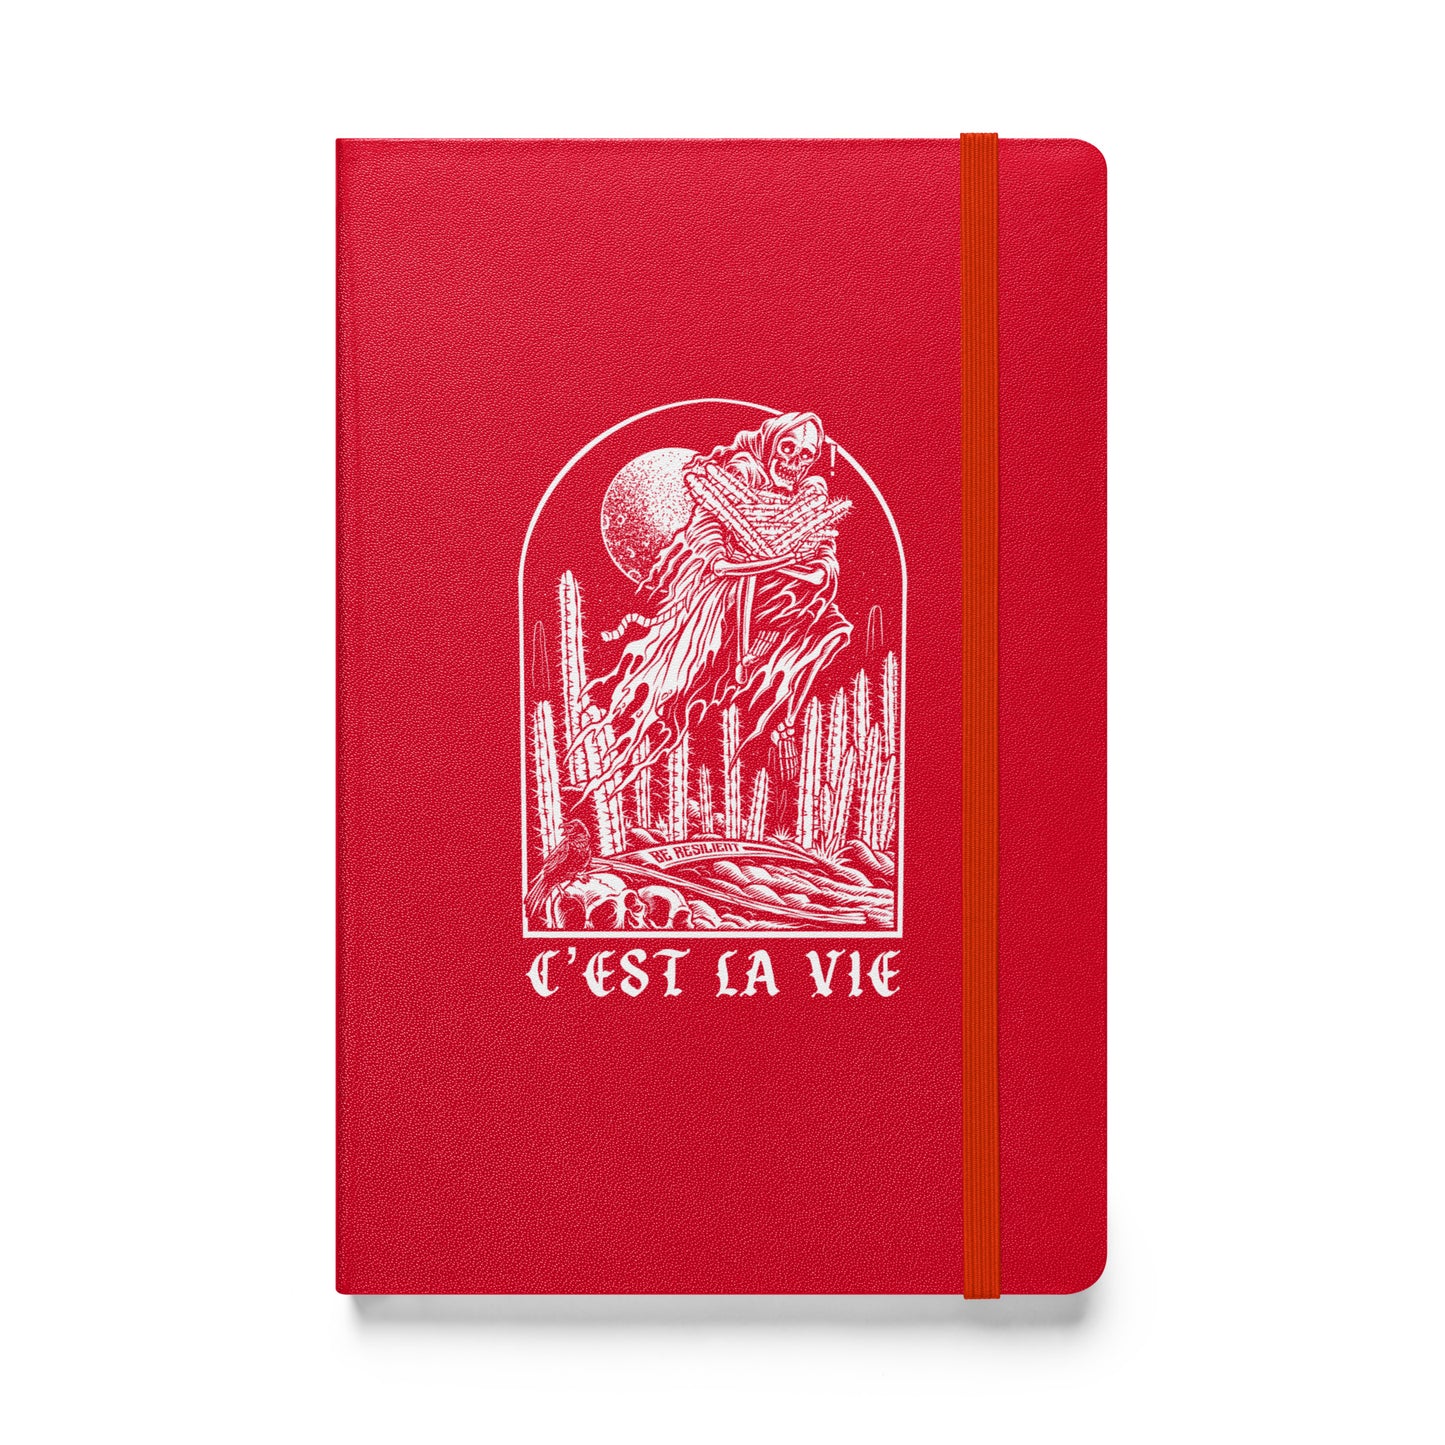 C'est La Vie hardcover bound notebook